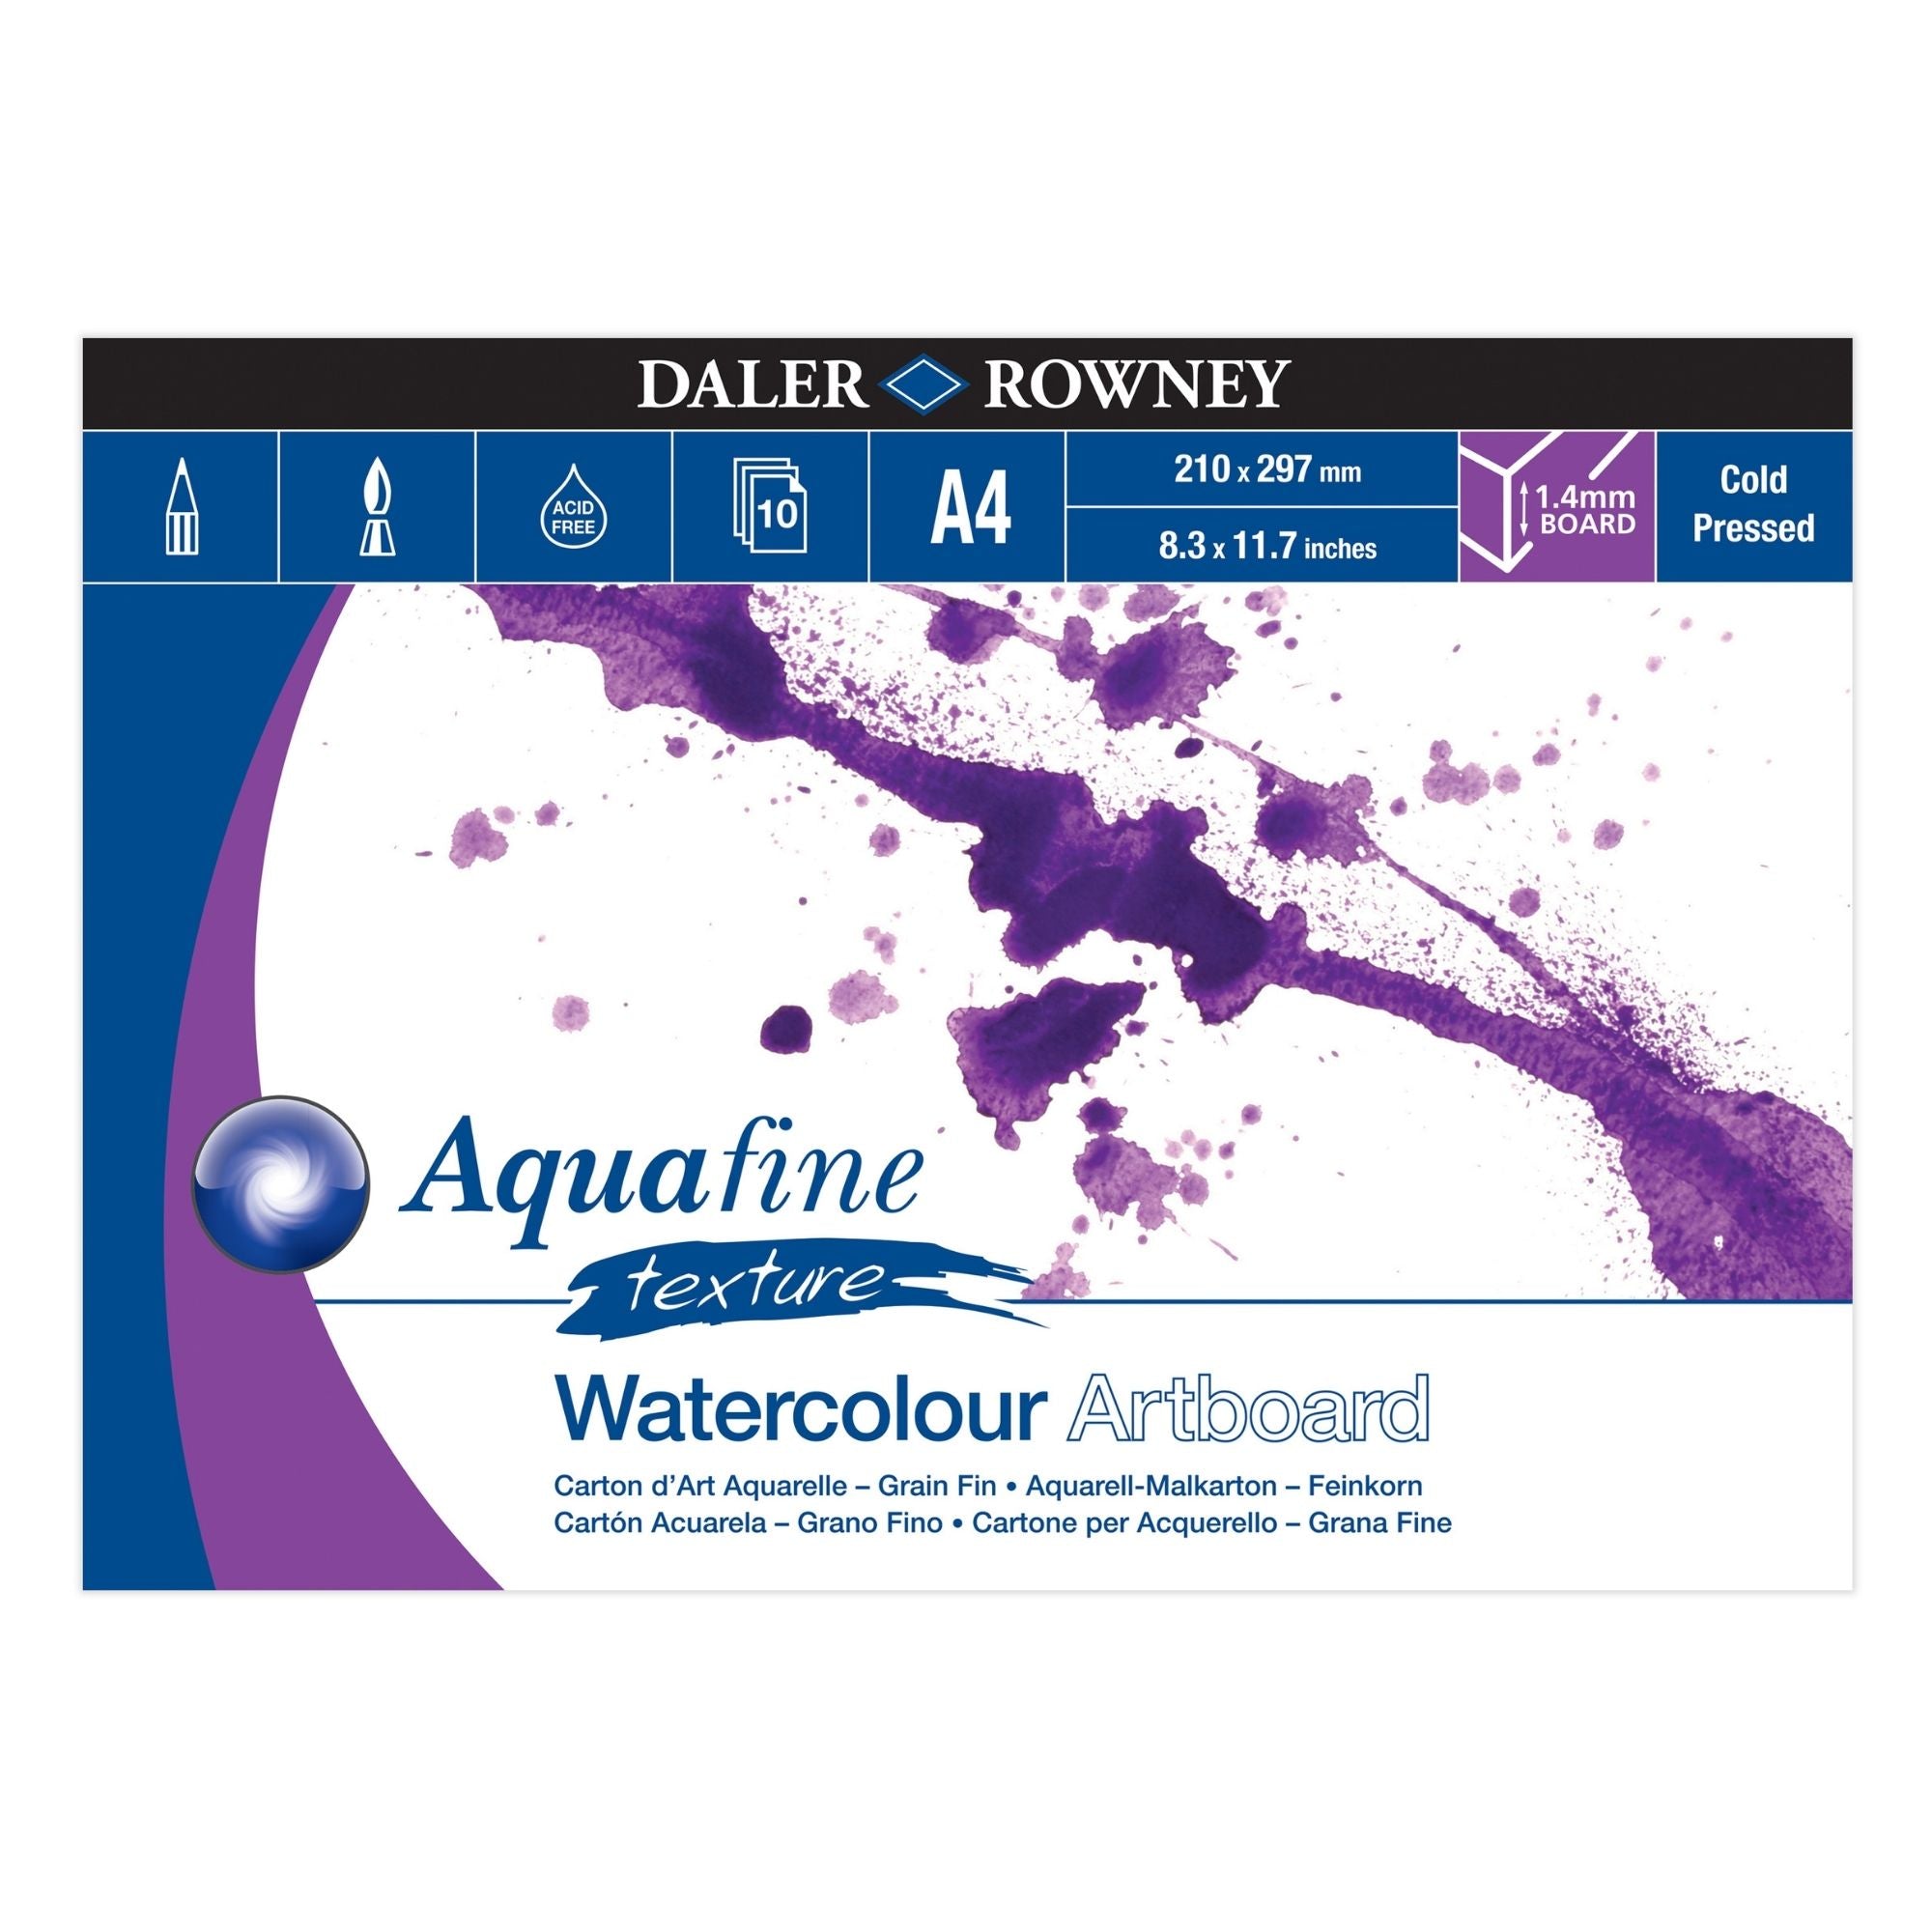 Daler-Rowney Aquafine Watercolour Artboard pads - Cold Pressed - A4